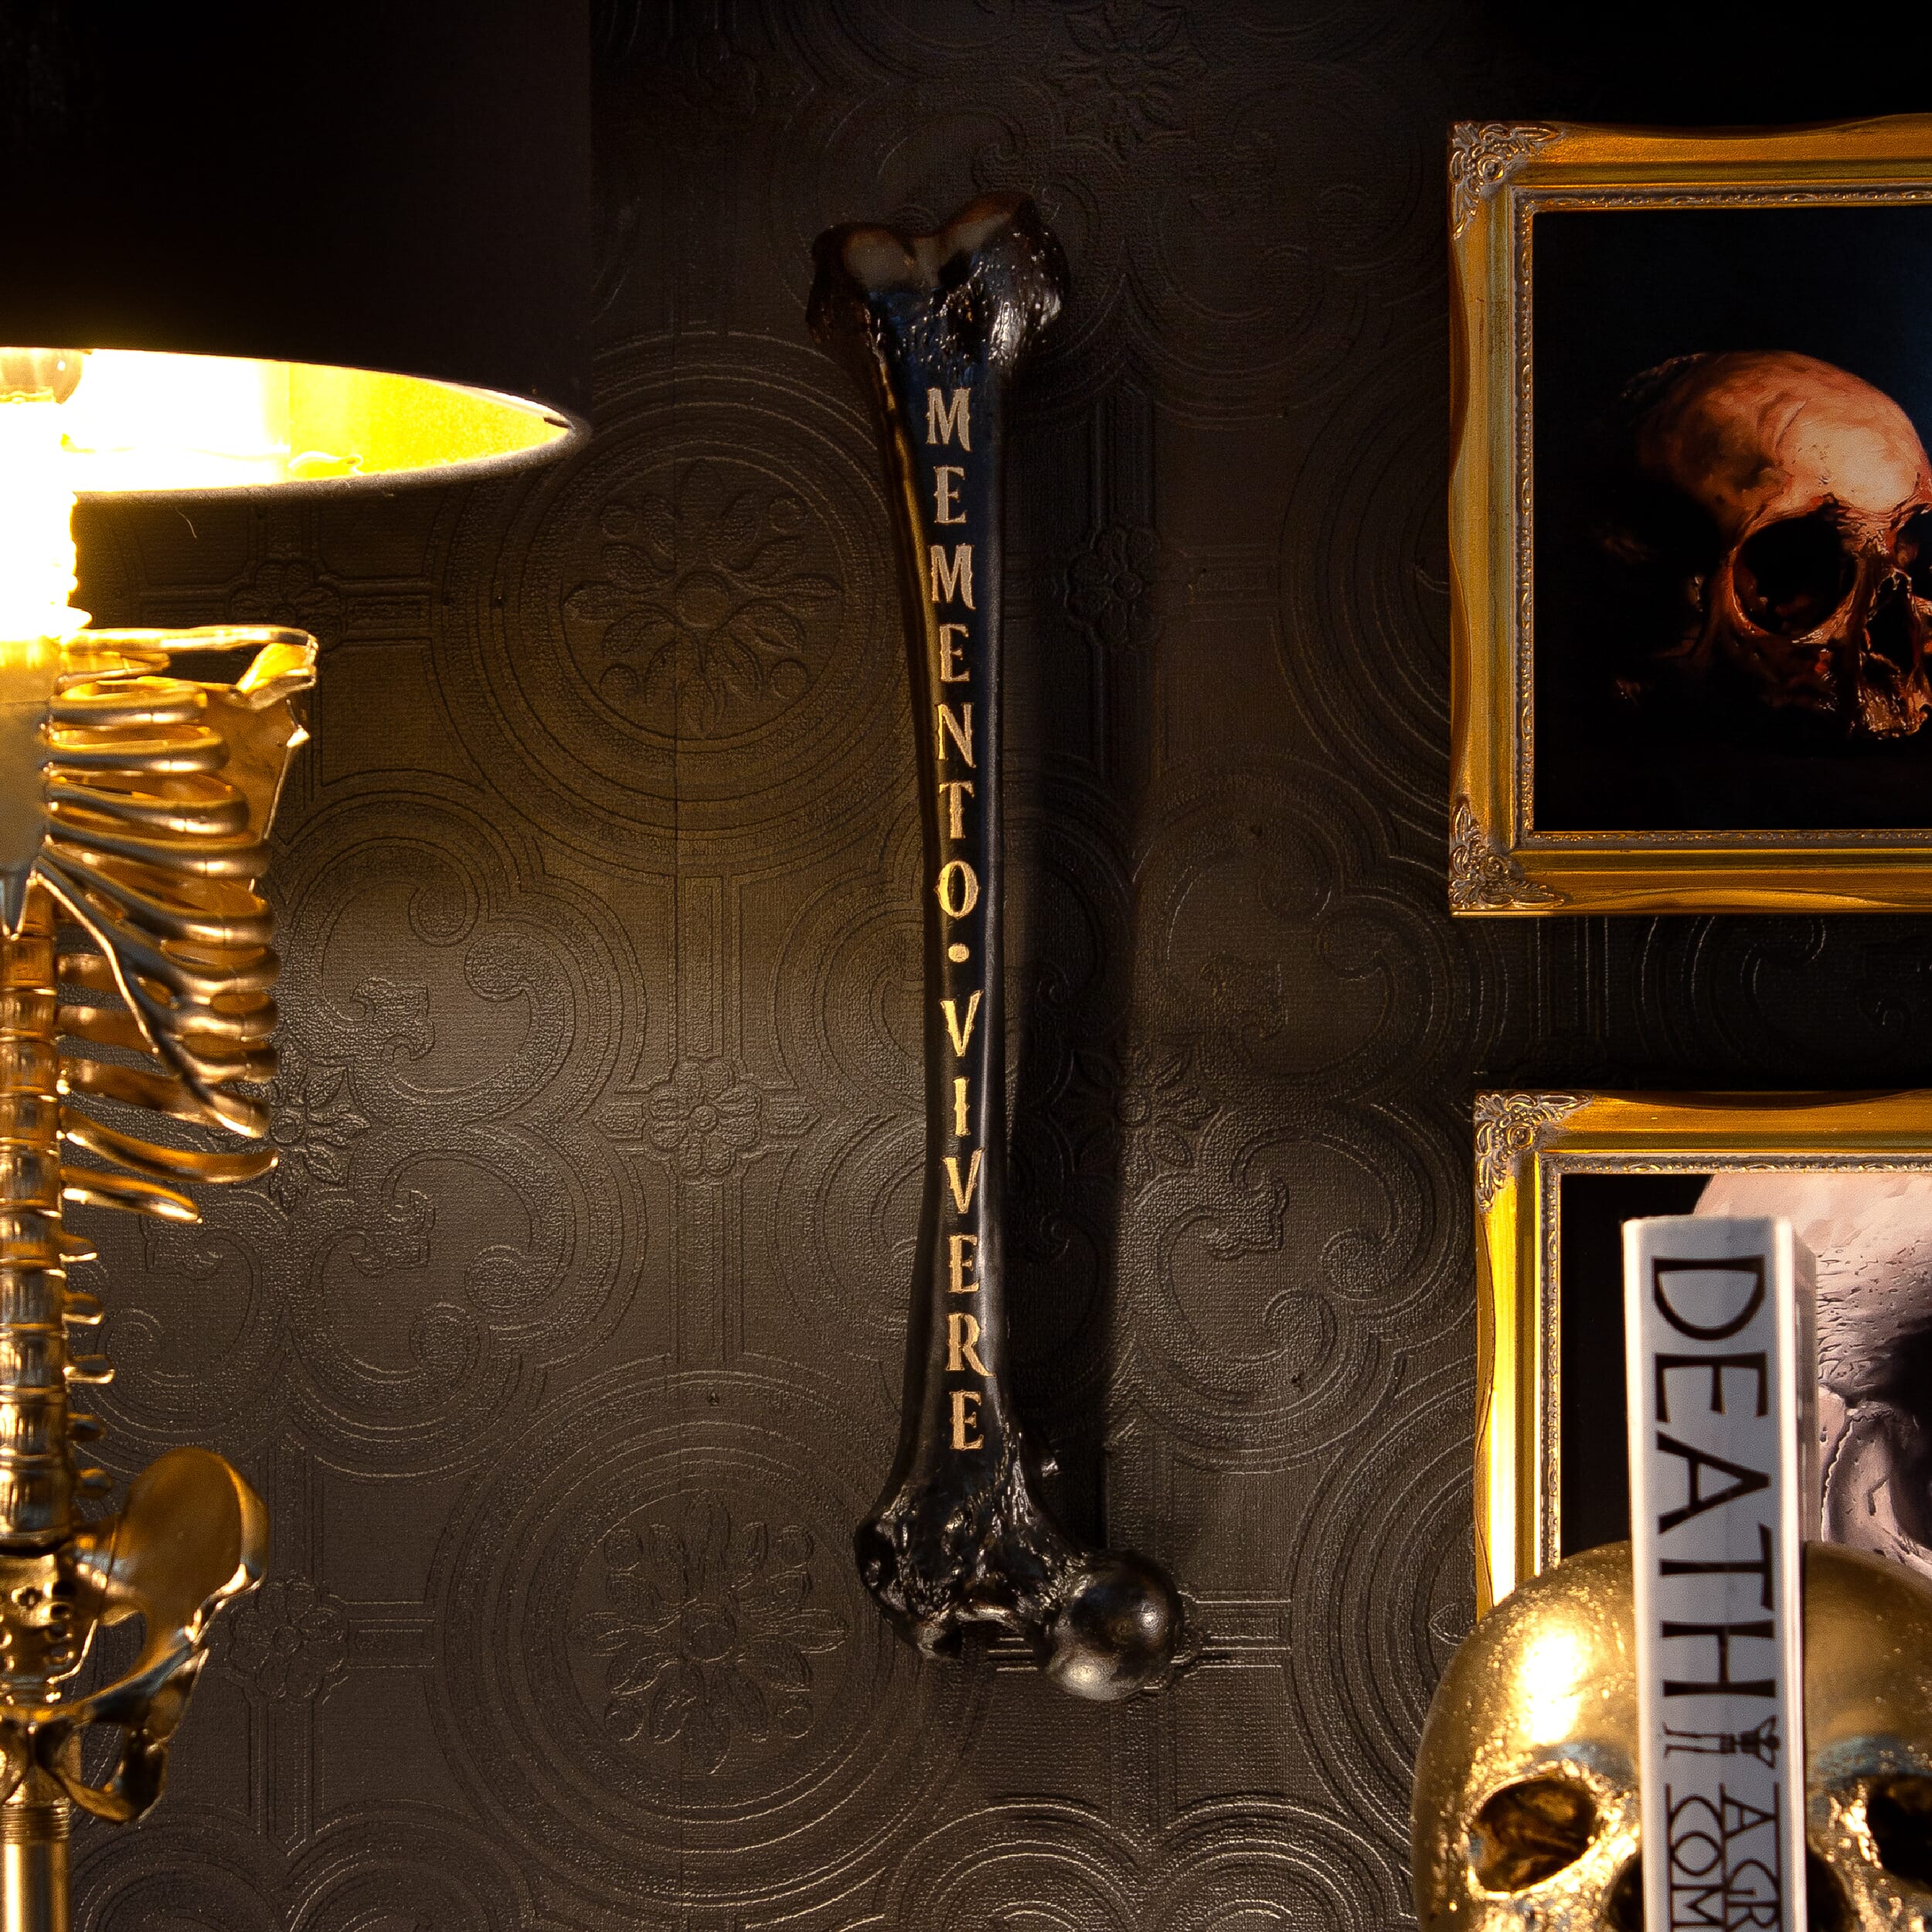 Memento Vivere femur bone - The Blackened Teeth - Gothic decor